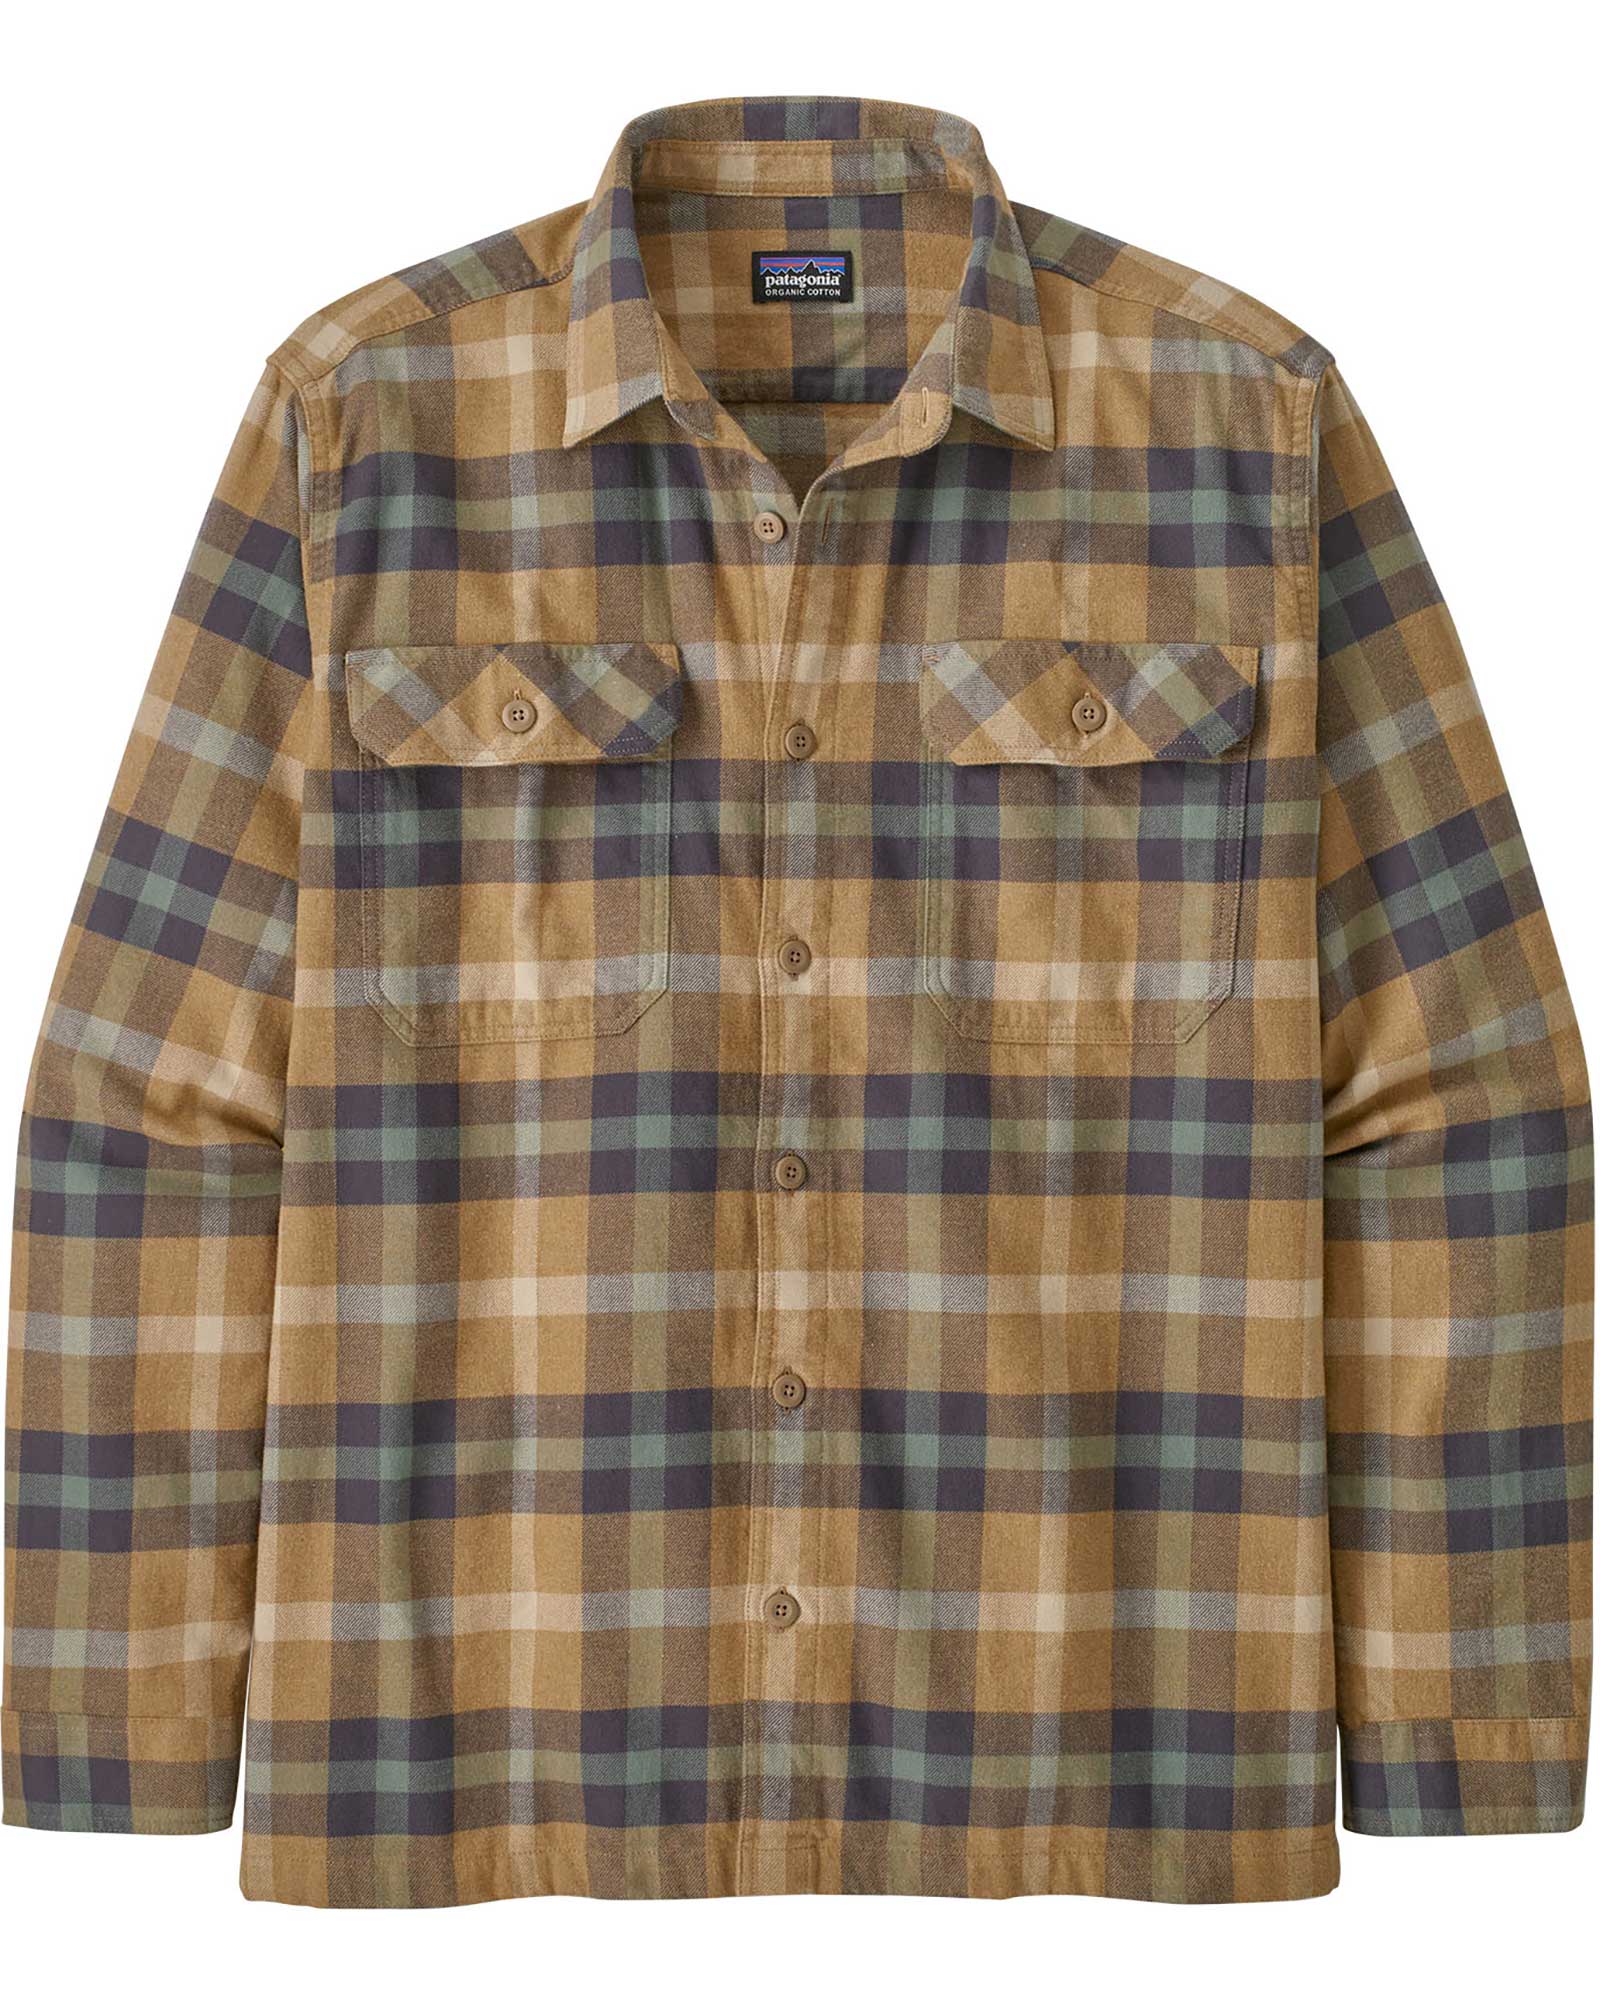 Patagonia Men’s Organic Long Sleeve Flannel Shirt - Mojave Khaki/Forage S